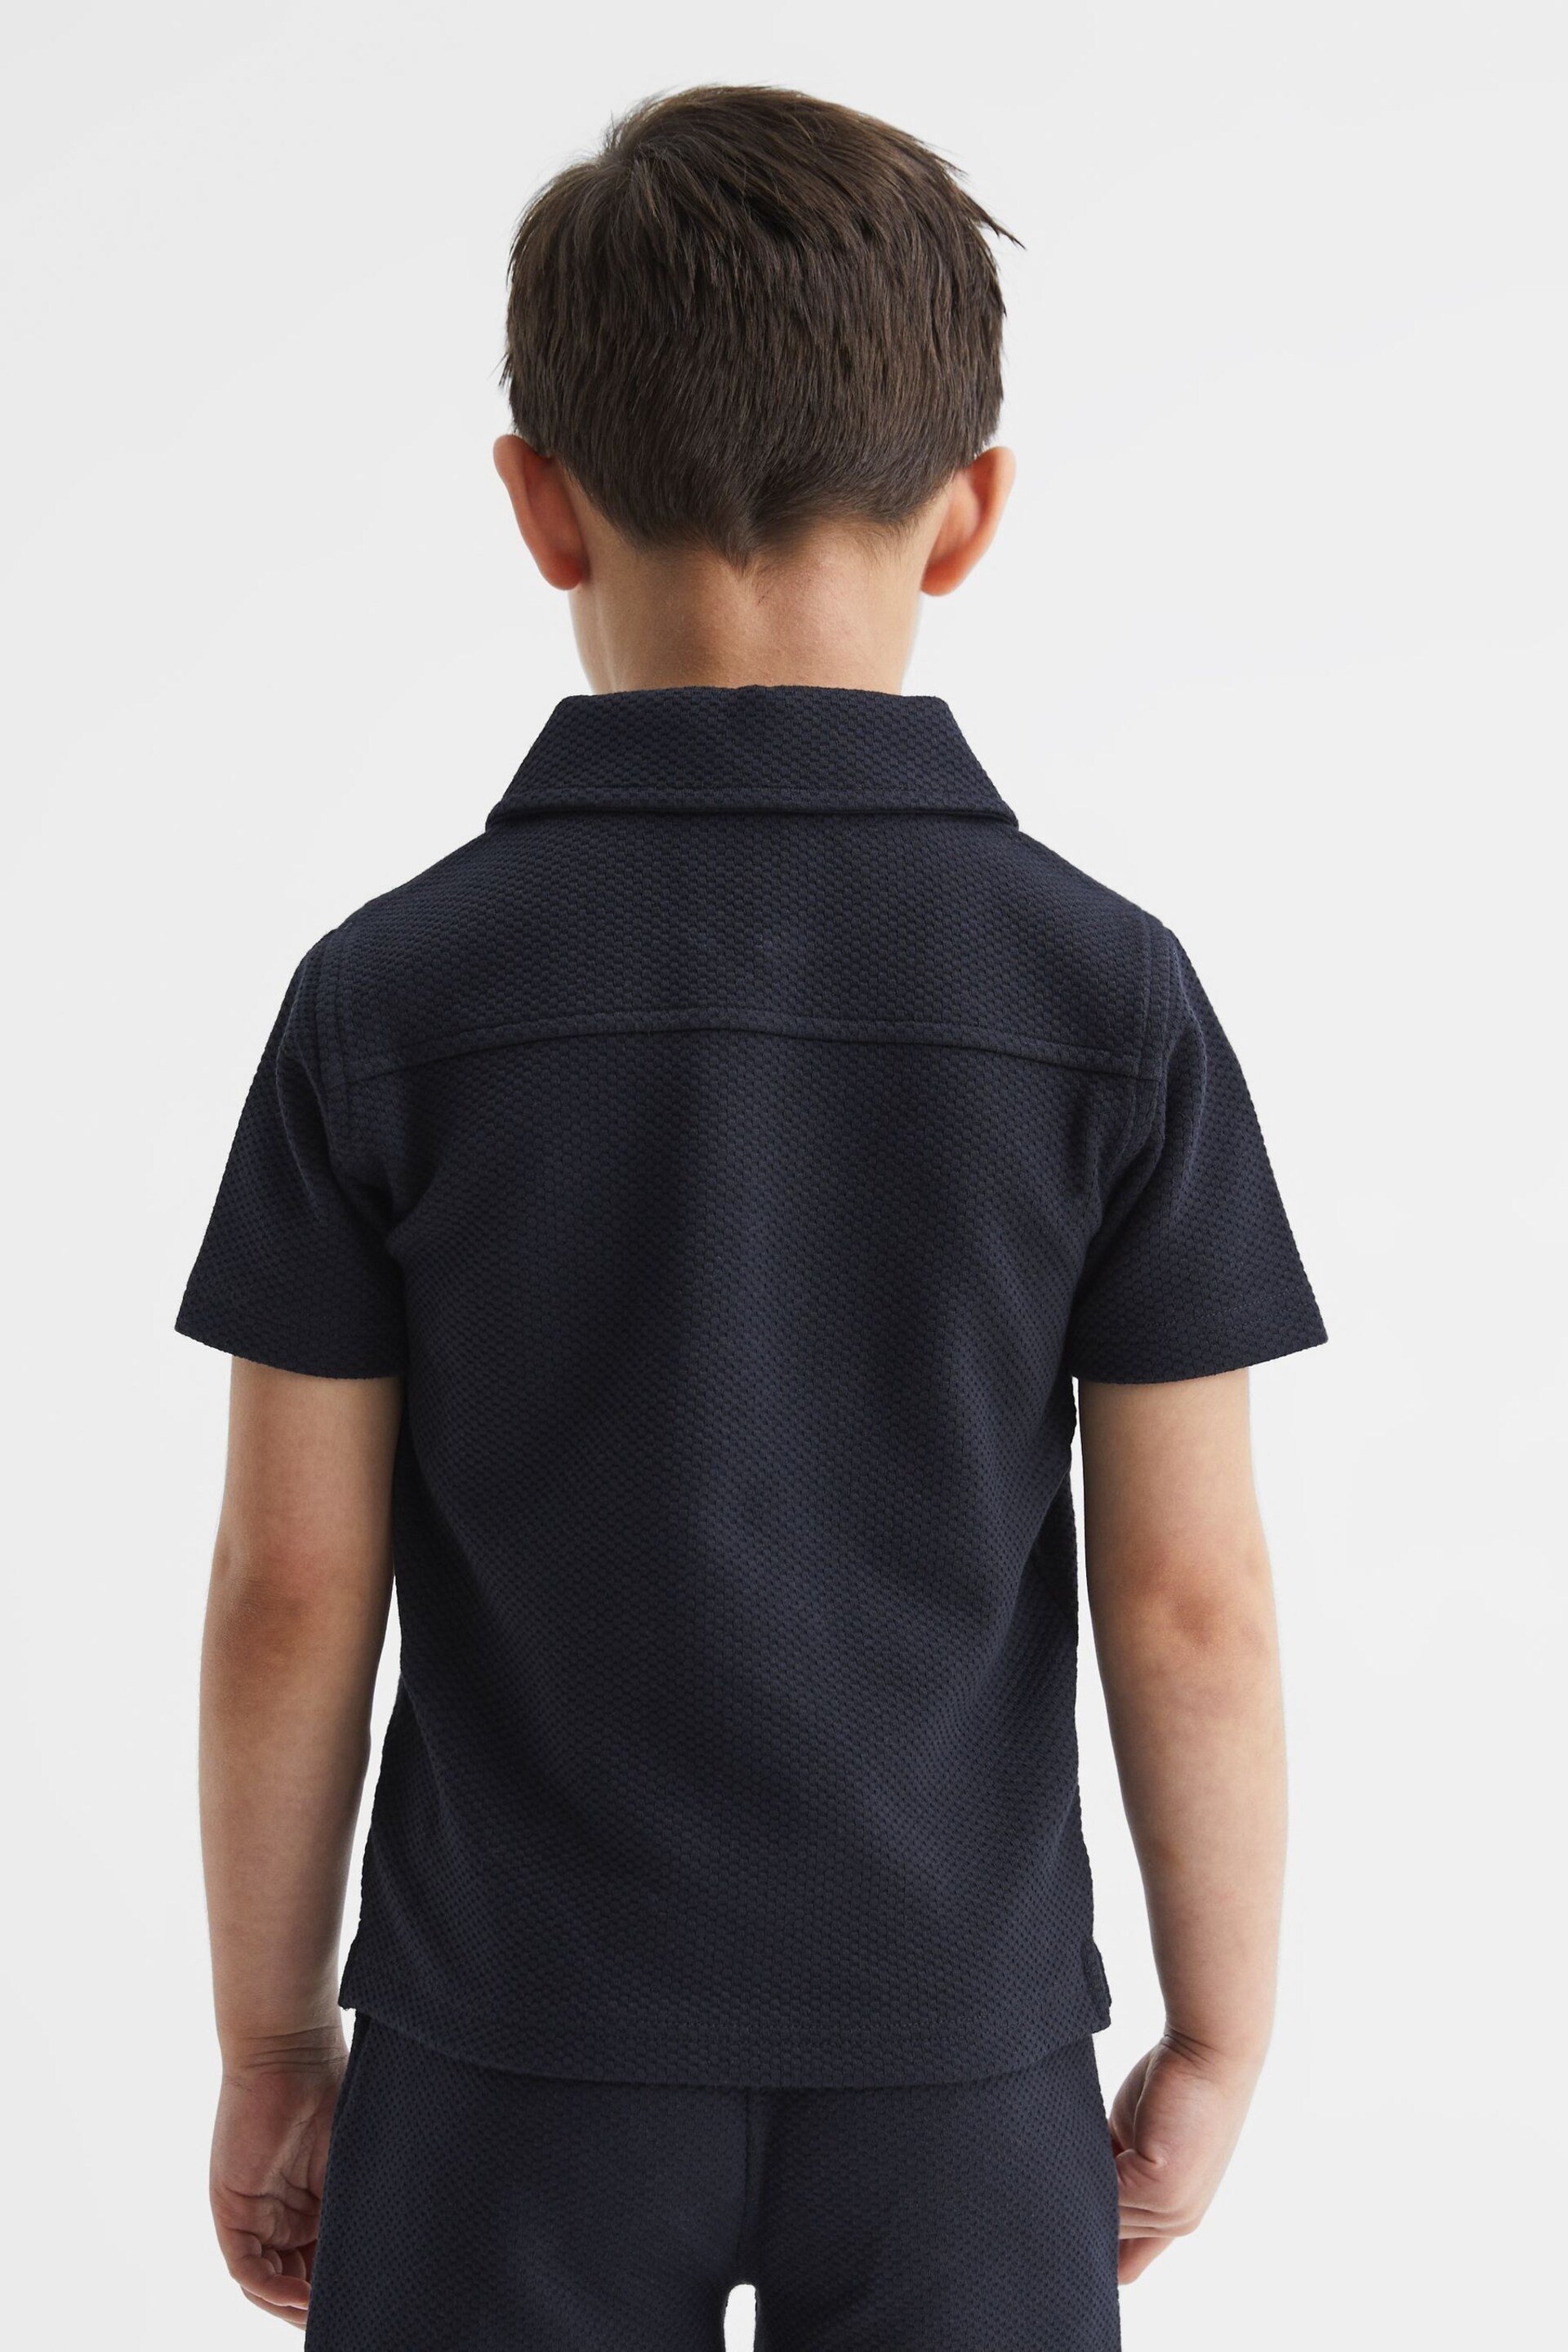 Reiss Navy Creed Junior Textured Half-Zip Polo Shirt - Image 5 of 6